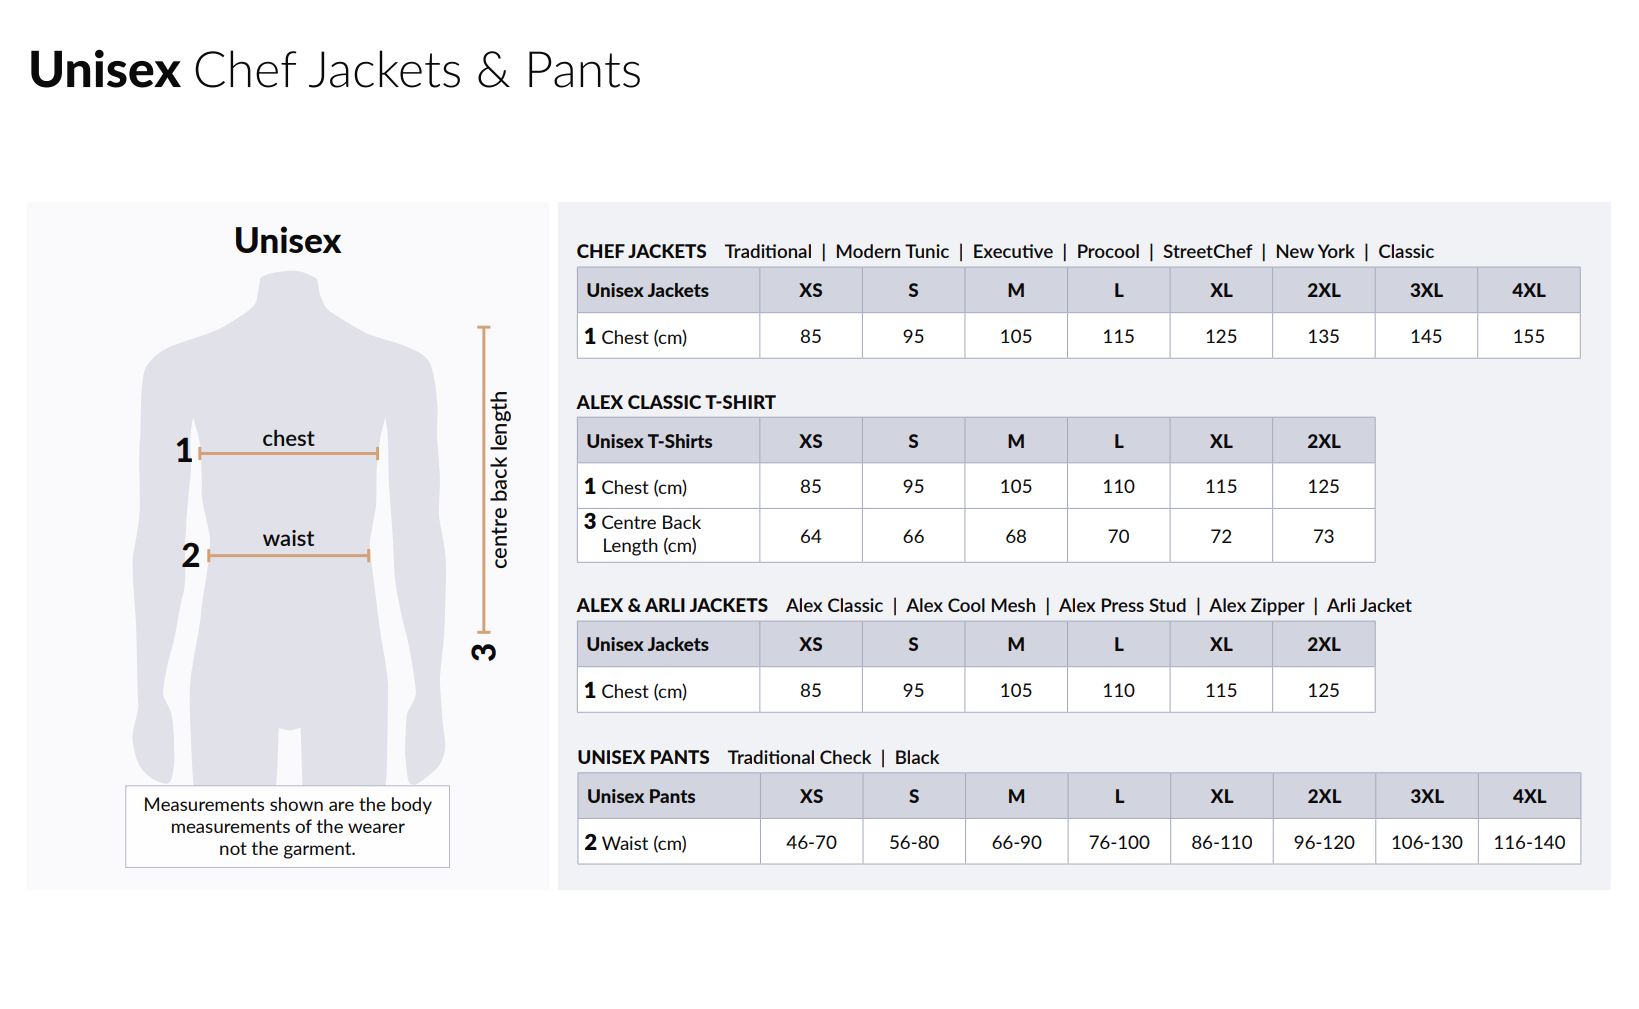 Prochef Drawstring Pant Check | Comfort Plus